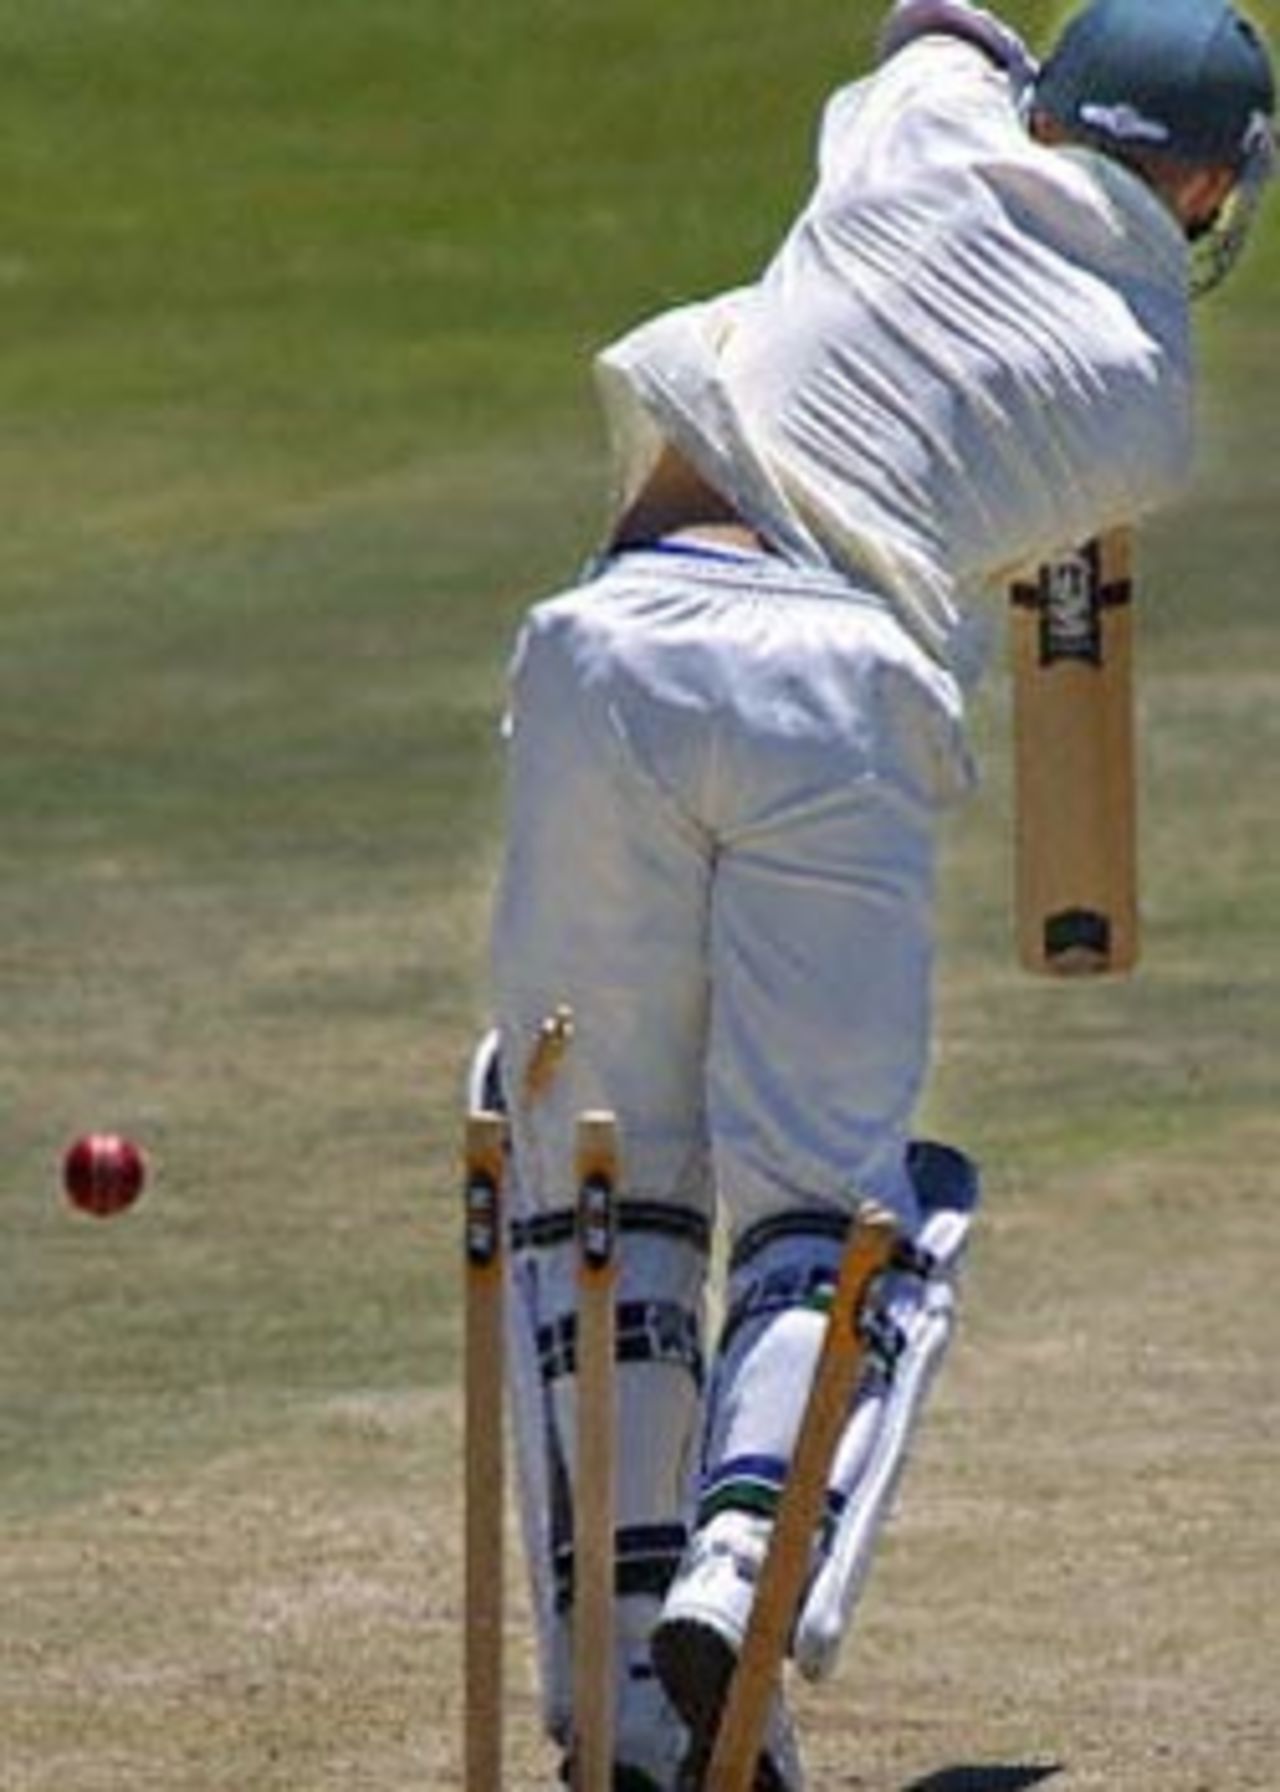 South Africa v India, 1st Test match, Day Three, Goodyear Park, Bloemfontein, 3-7 November 2001